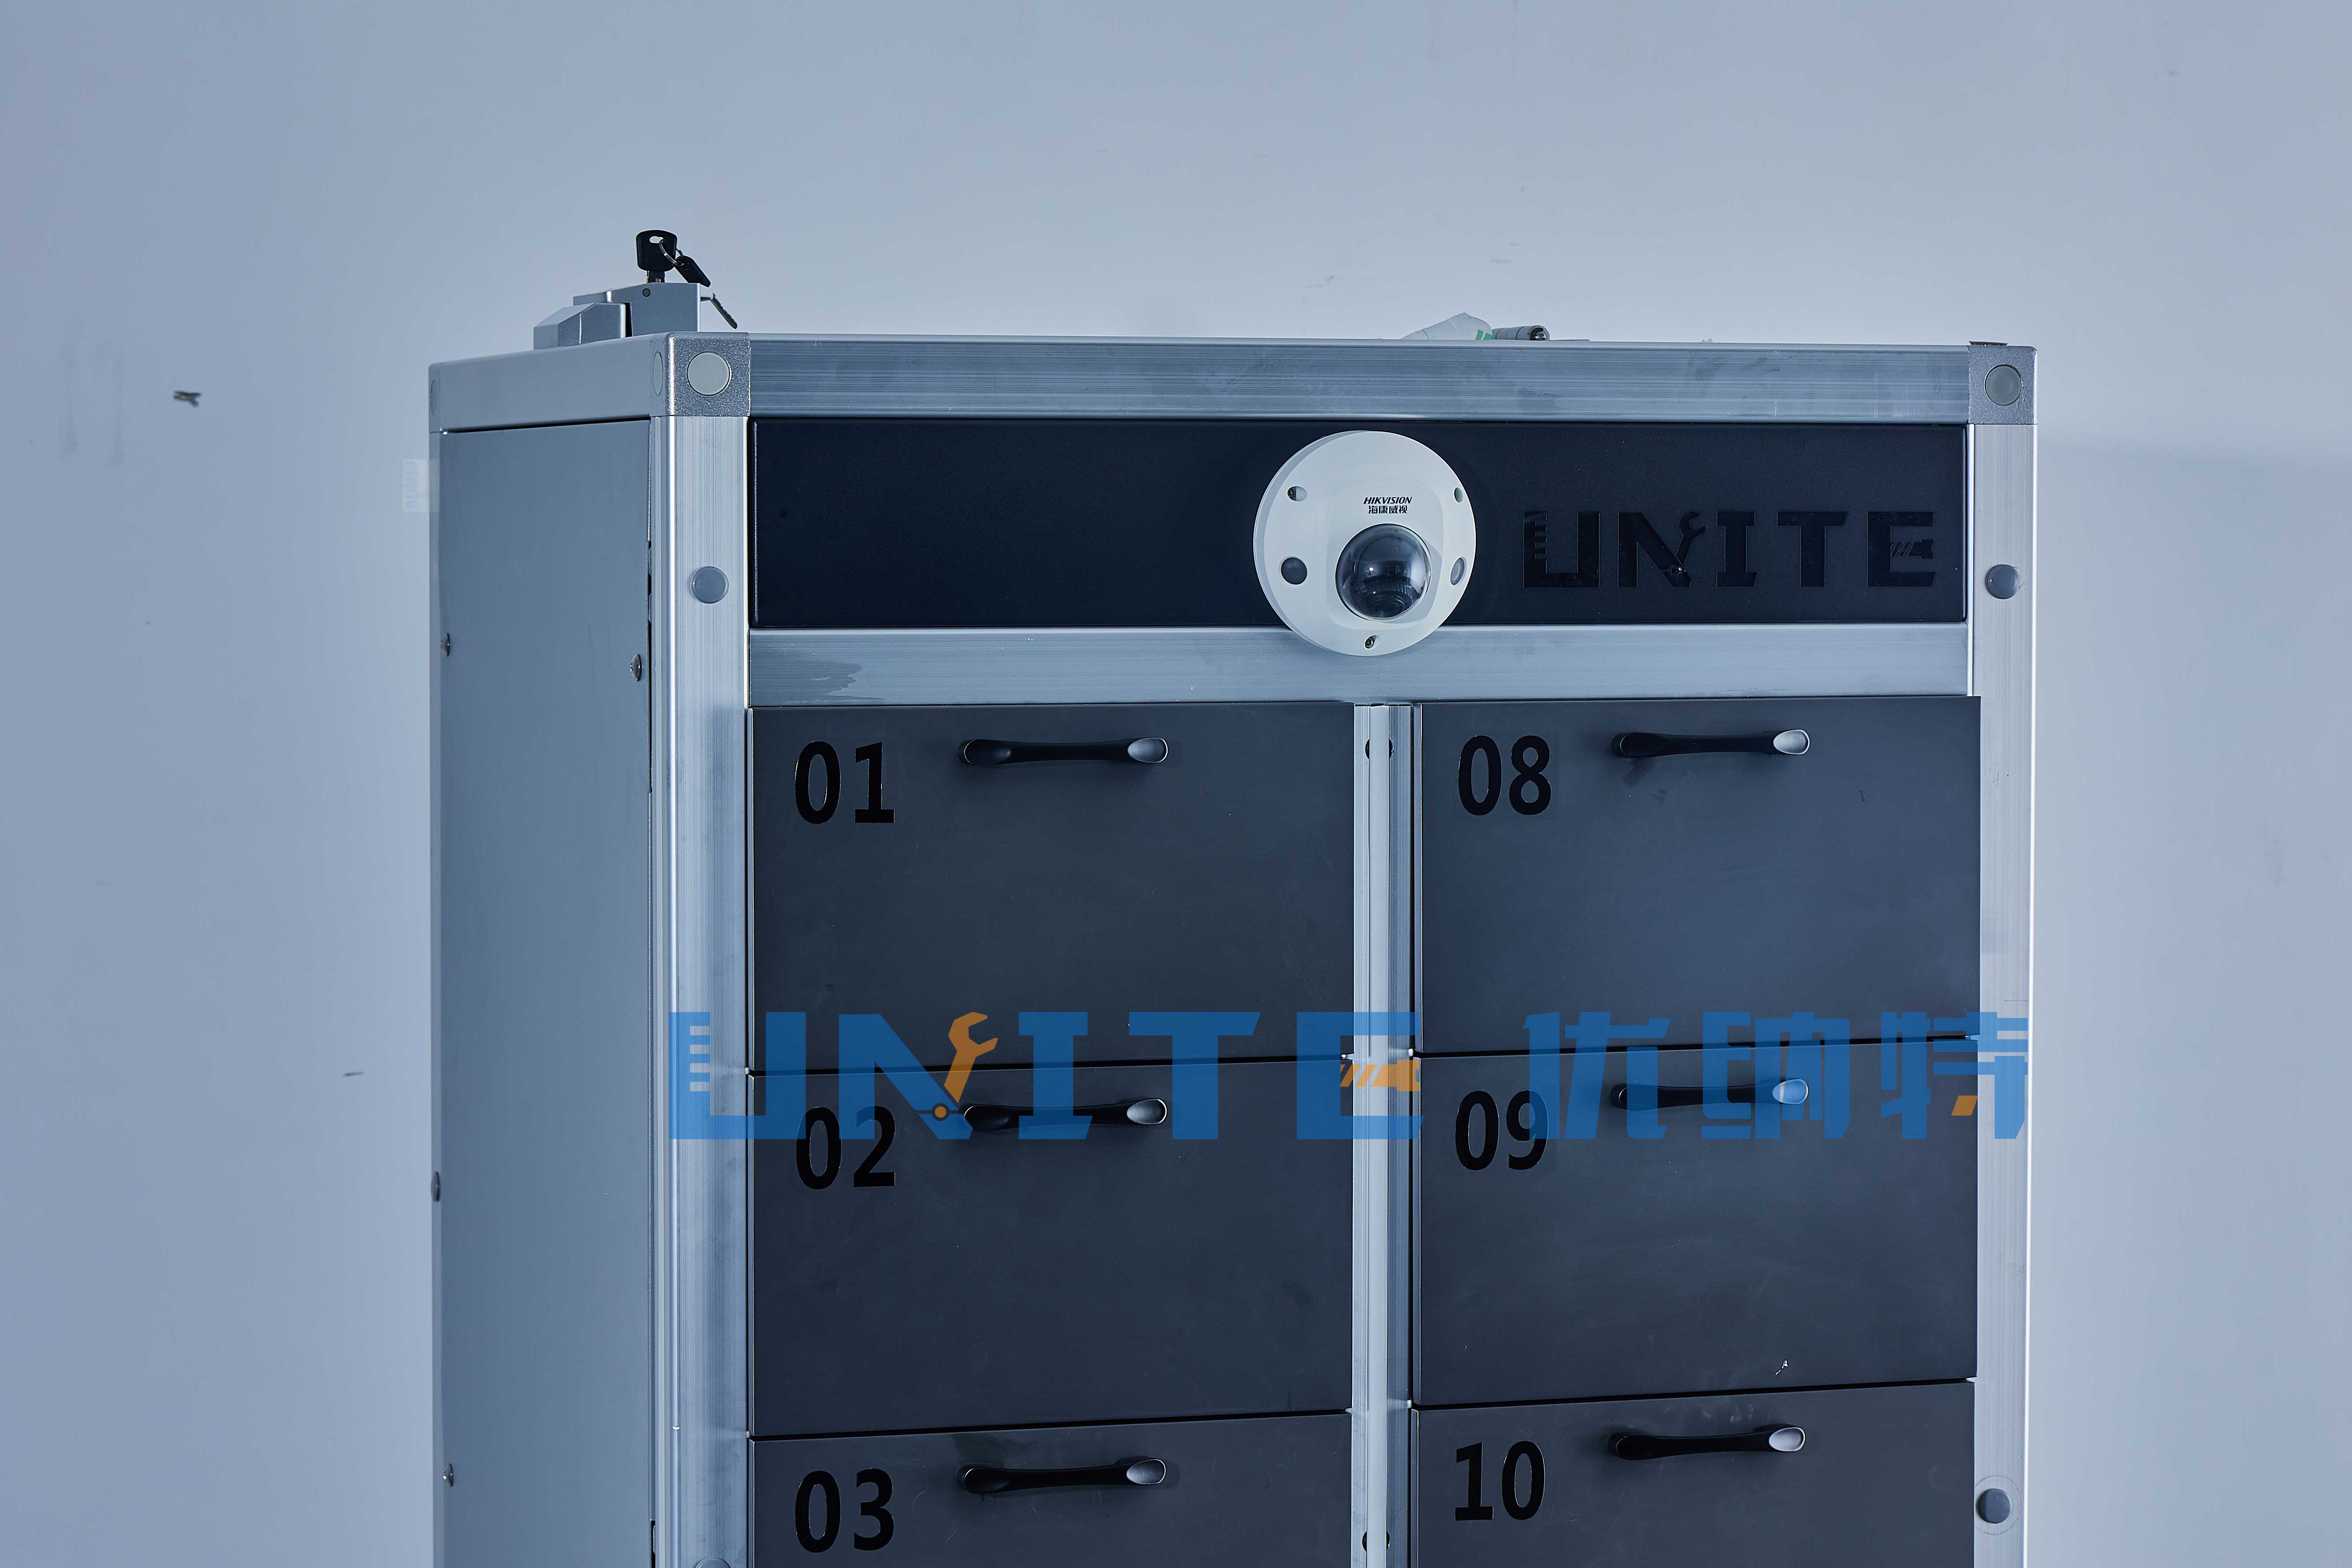 Unite Usample V1.2 Laboratory Sample Management System Matrix IoT Room Temperature Storage Box for Standard Products, Drugs